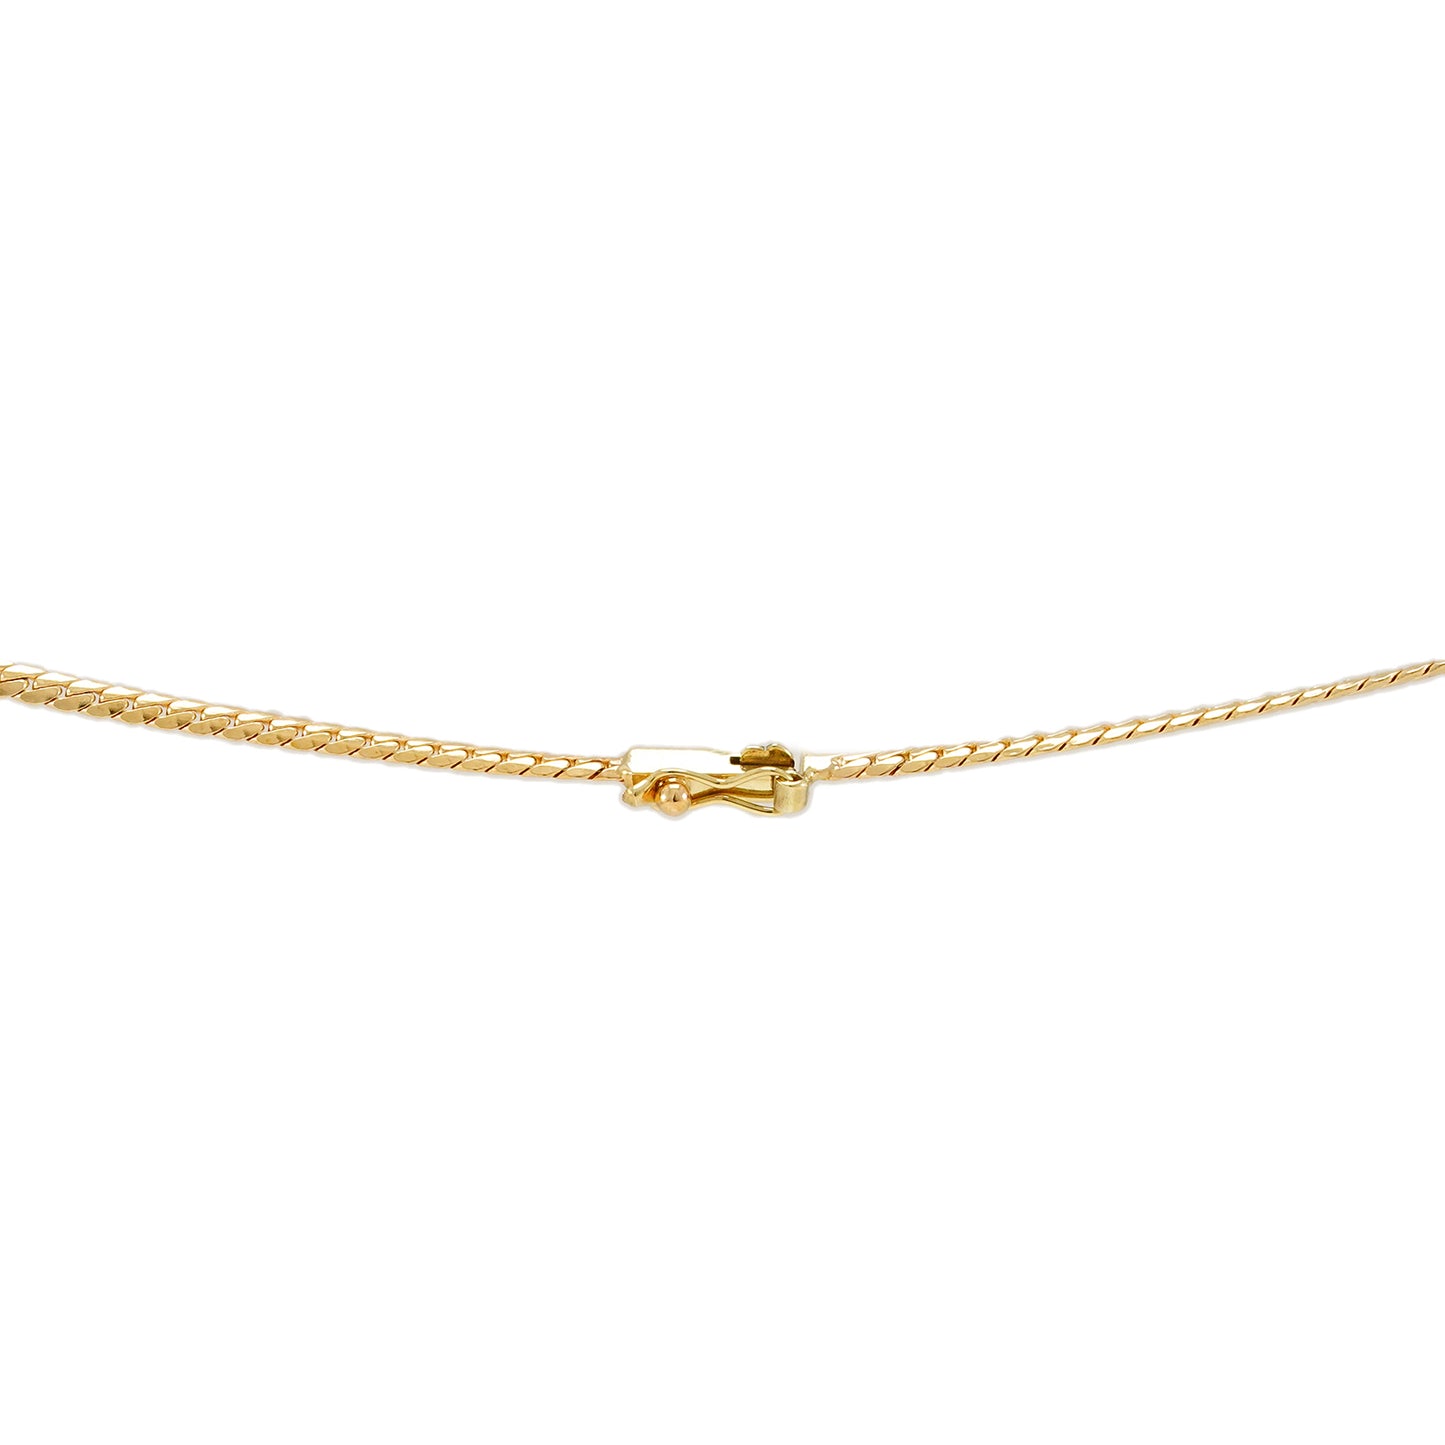 Diamond necklace tank yellow gold 14K women's jewelry gold chain diamond jewelry